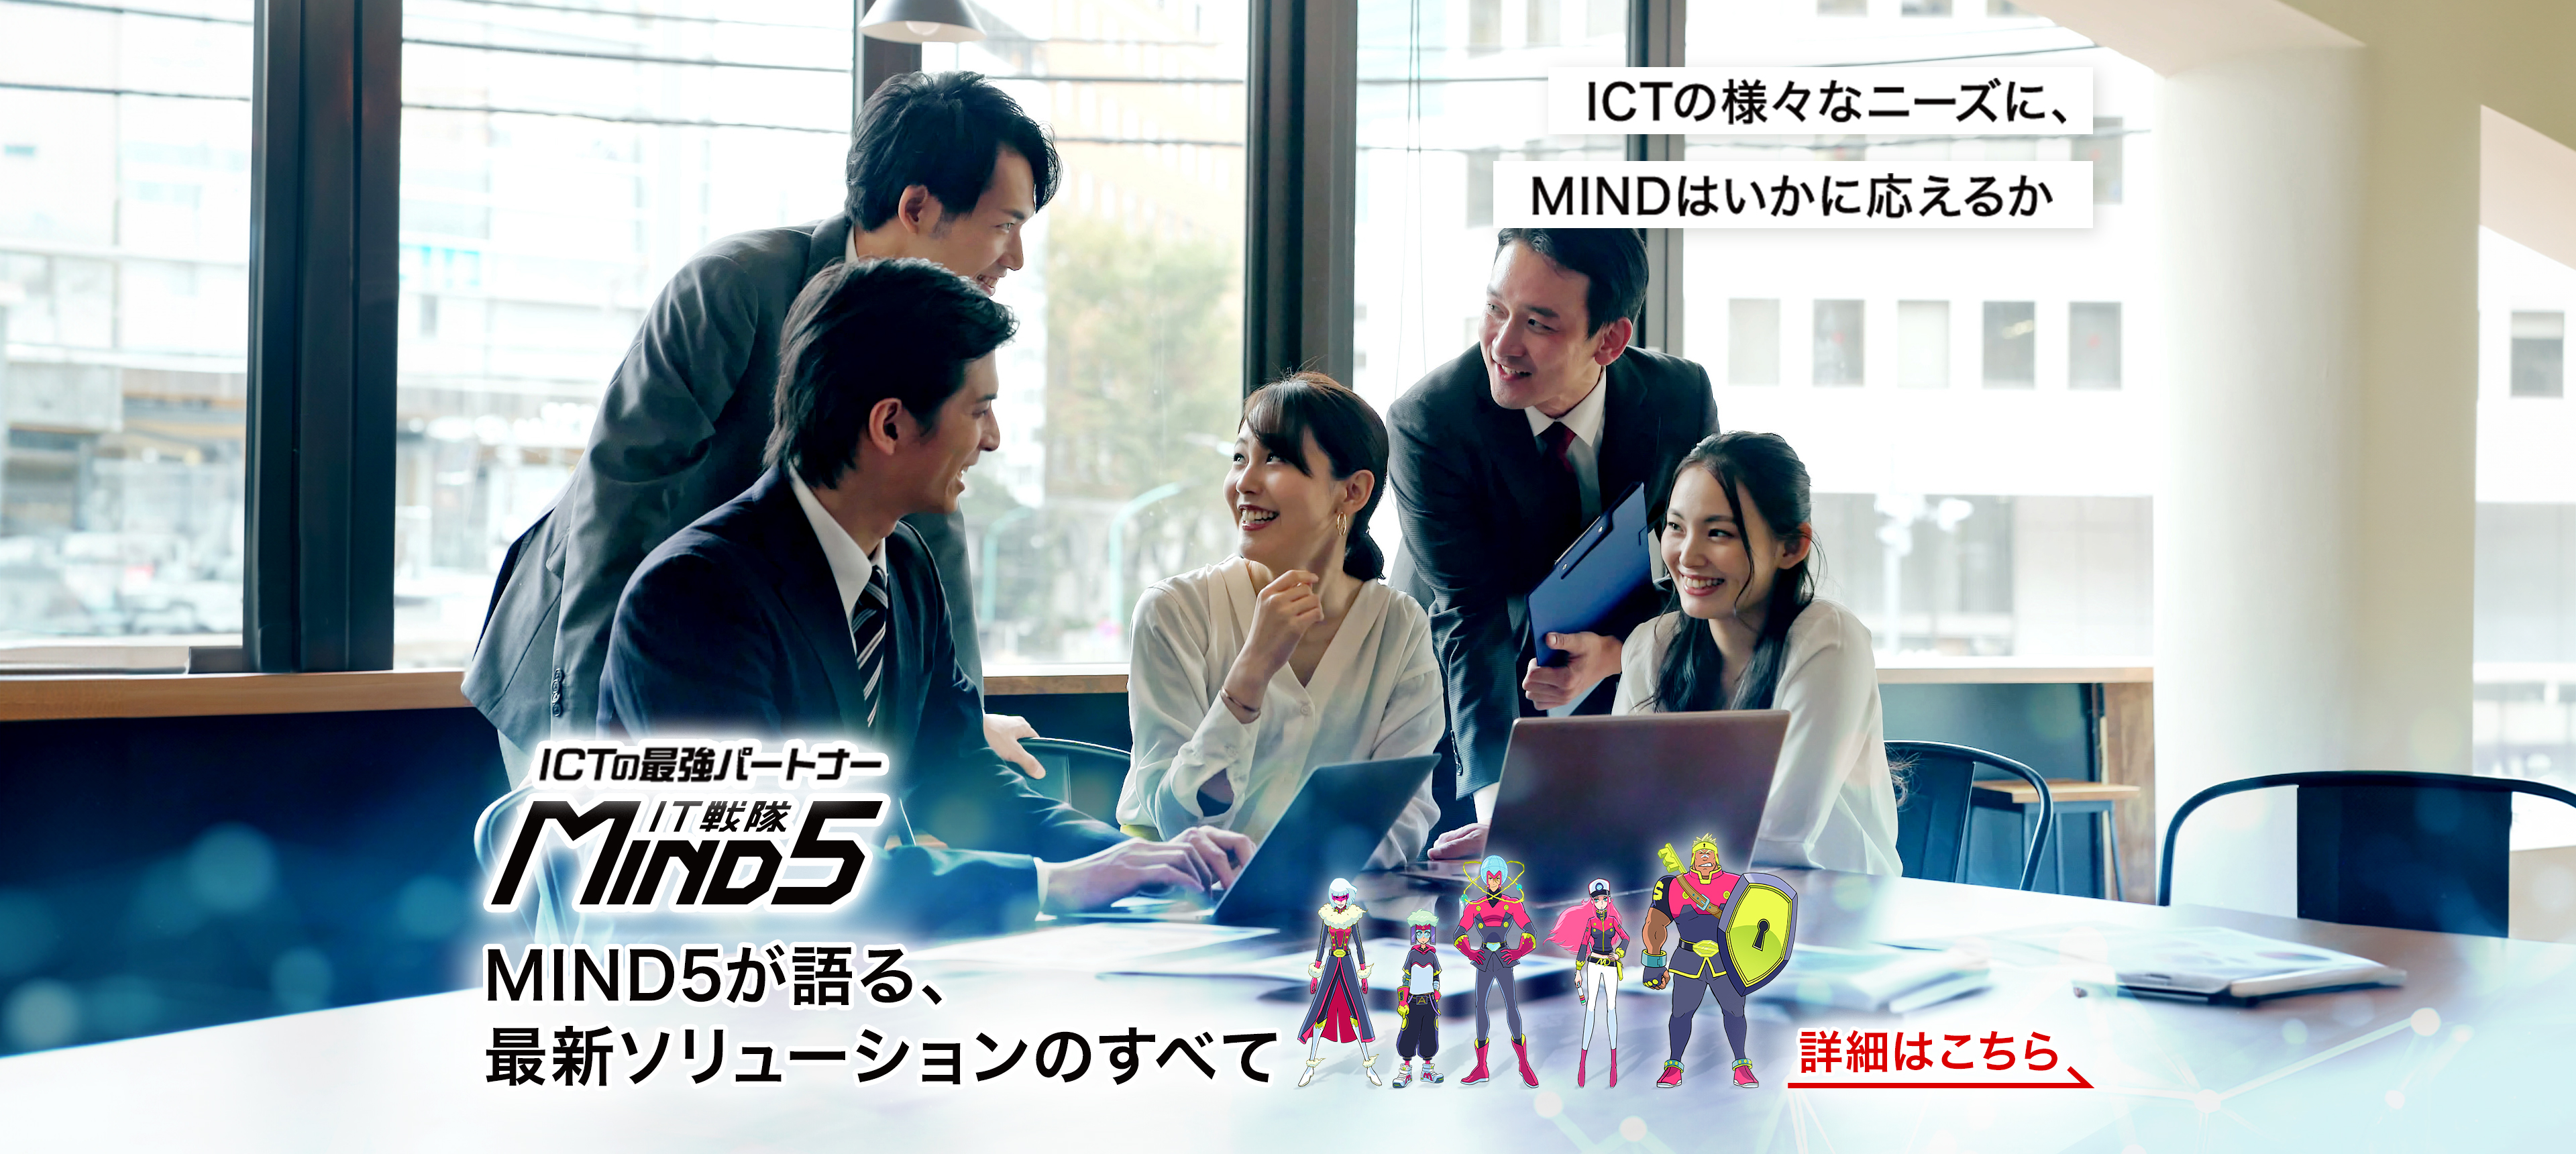 ICTの最強パートナー IT戦隊MIND5